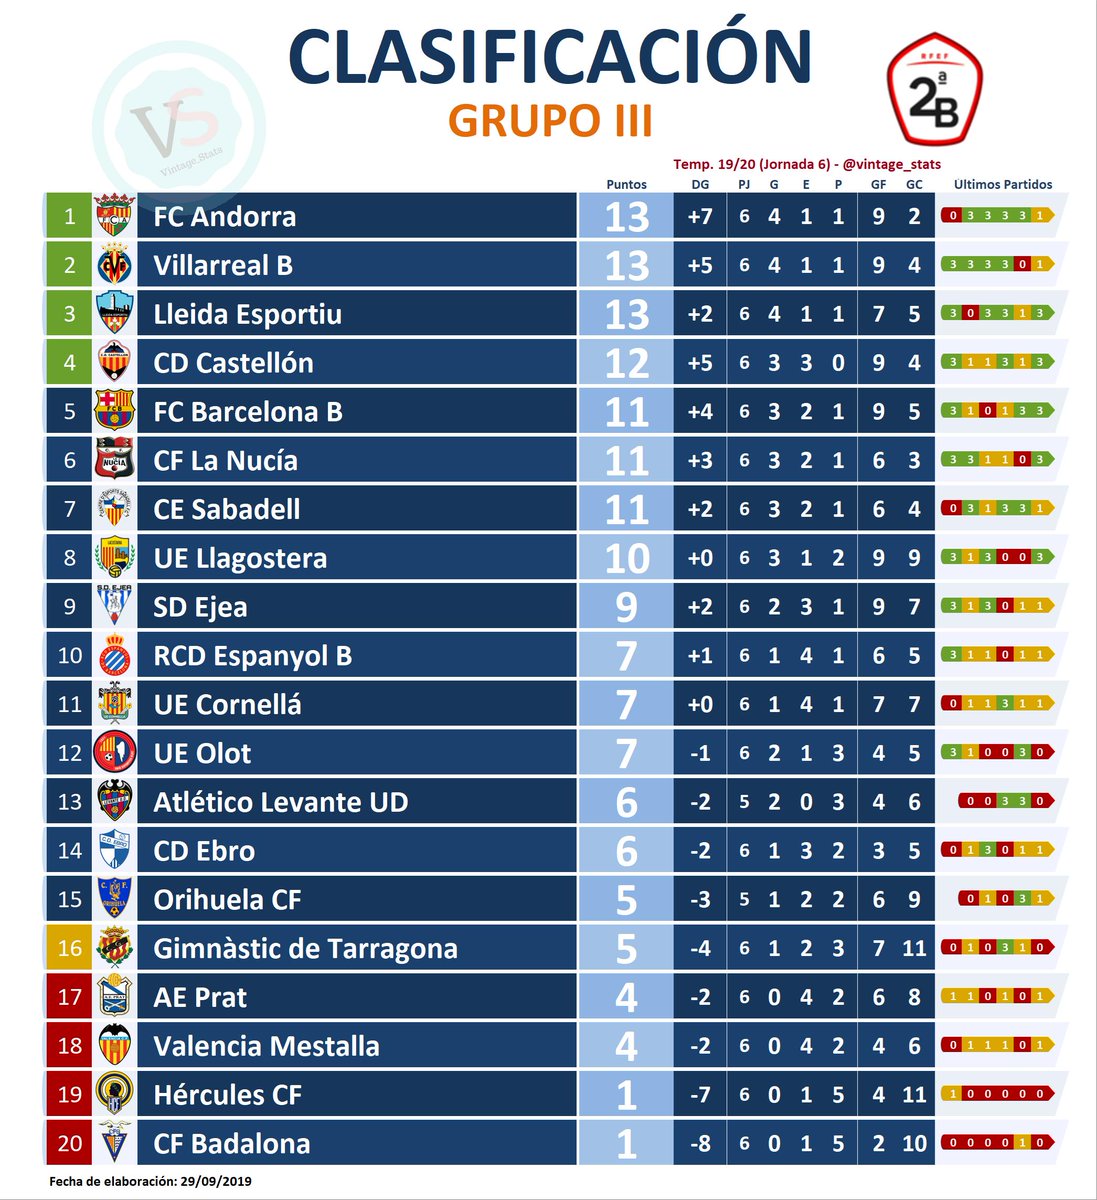 Estadísticas material Dialecto vintage_stats on Twitter: "📈 #Ranking #2bg3 Jornada 6 🔝🔟 CLASIFICACIÓN  GRUPO III de #SegundaB [1] @fcandorra [2] @VillarrealCF B [3]  @Lleida_Esportiu [4] @CD_Castellon [5] @FCBarcelonaB [6] @cfnucia [7]  @CESabadell [8] @UELlagostera [9] @AupaEjea ...